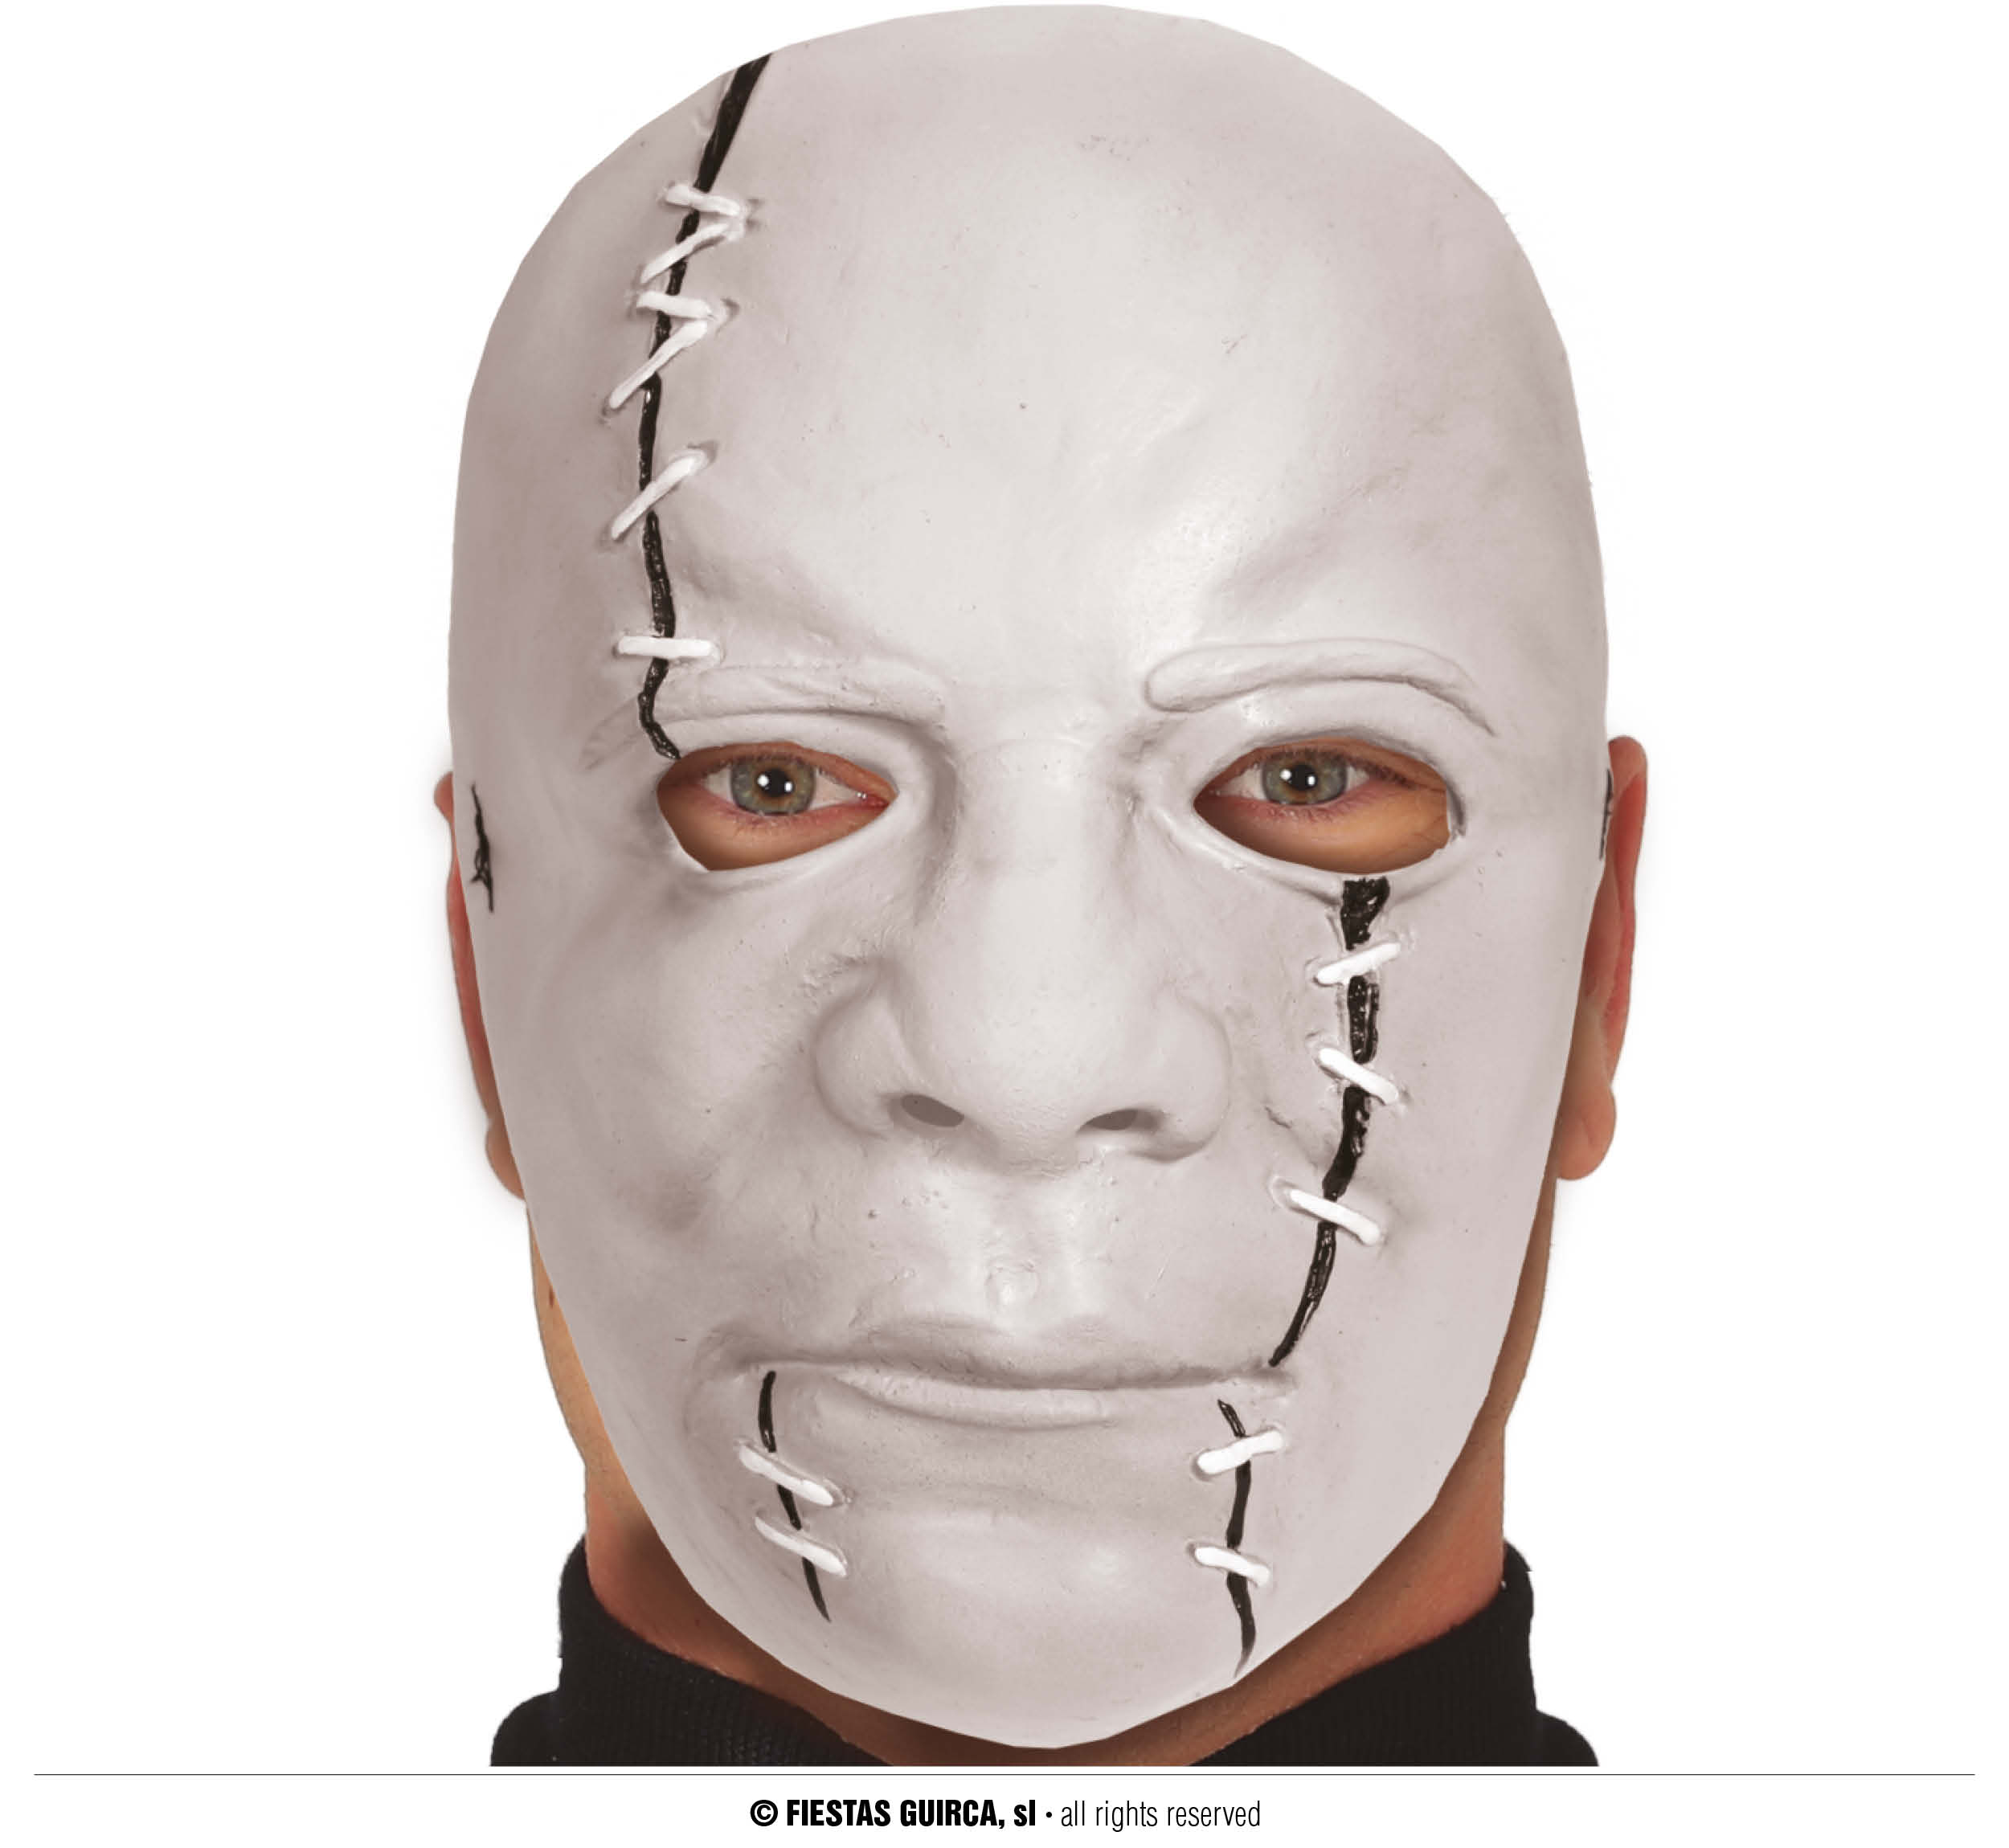 Halloween Latex Halfmasker Killer with Scars                       